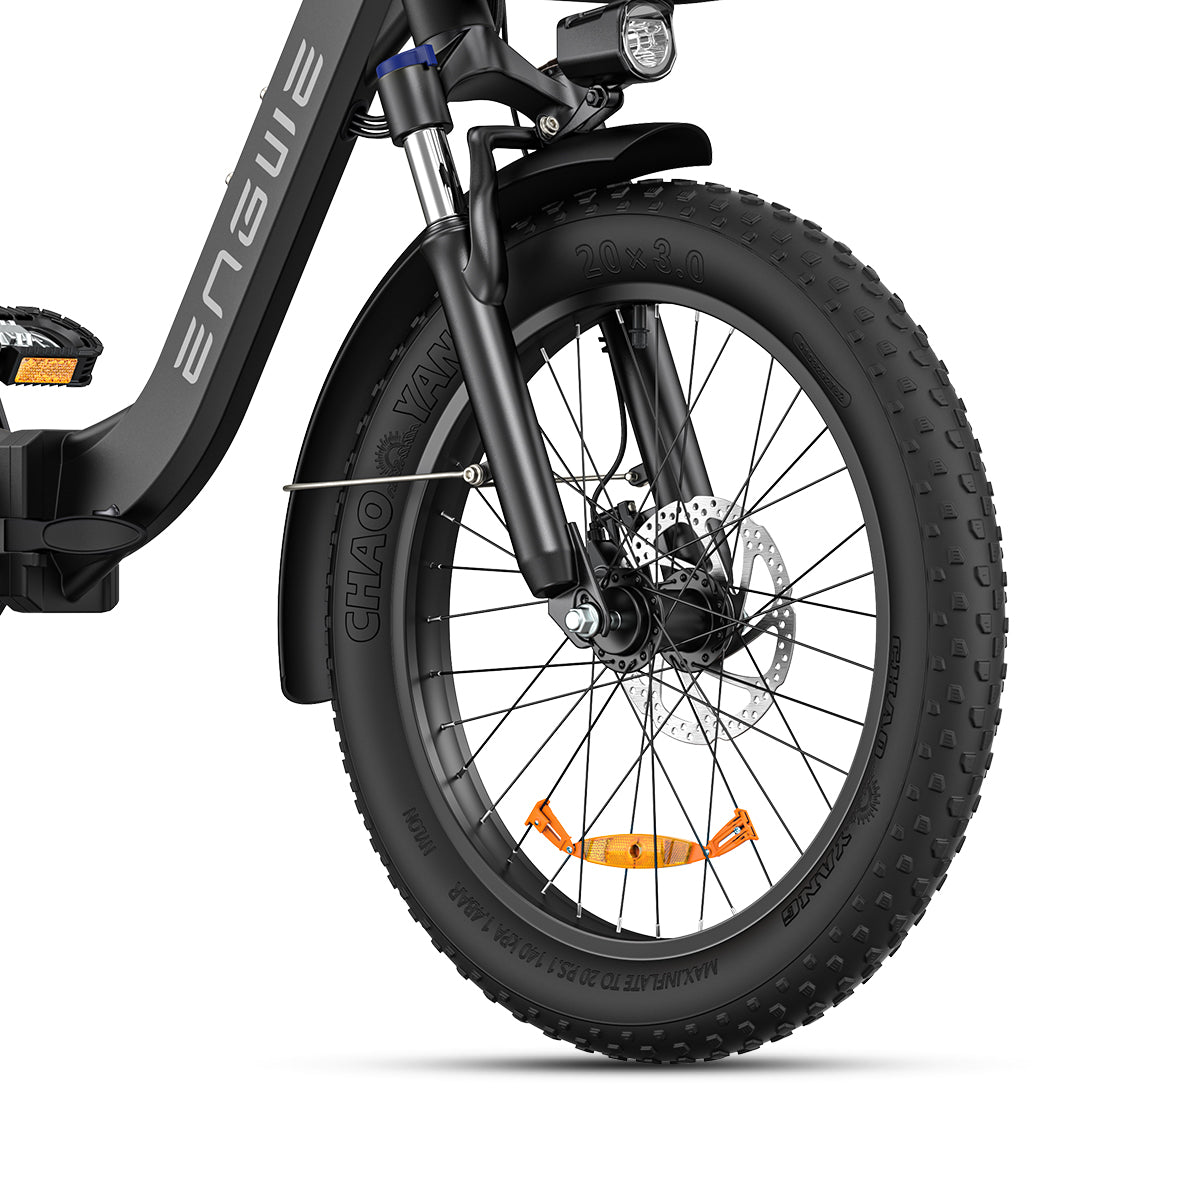 Engwe L20 SE 250W 20" Foldable Electric Trekking Bike 15.6Ah Step-through E-bike